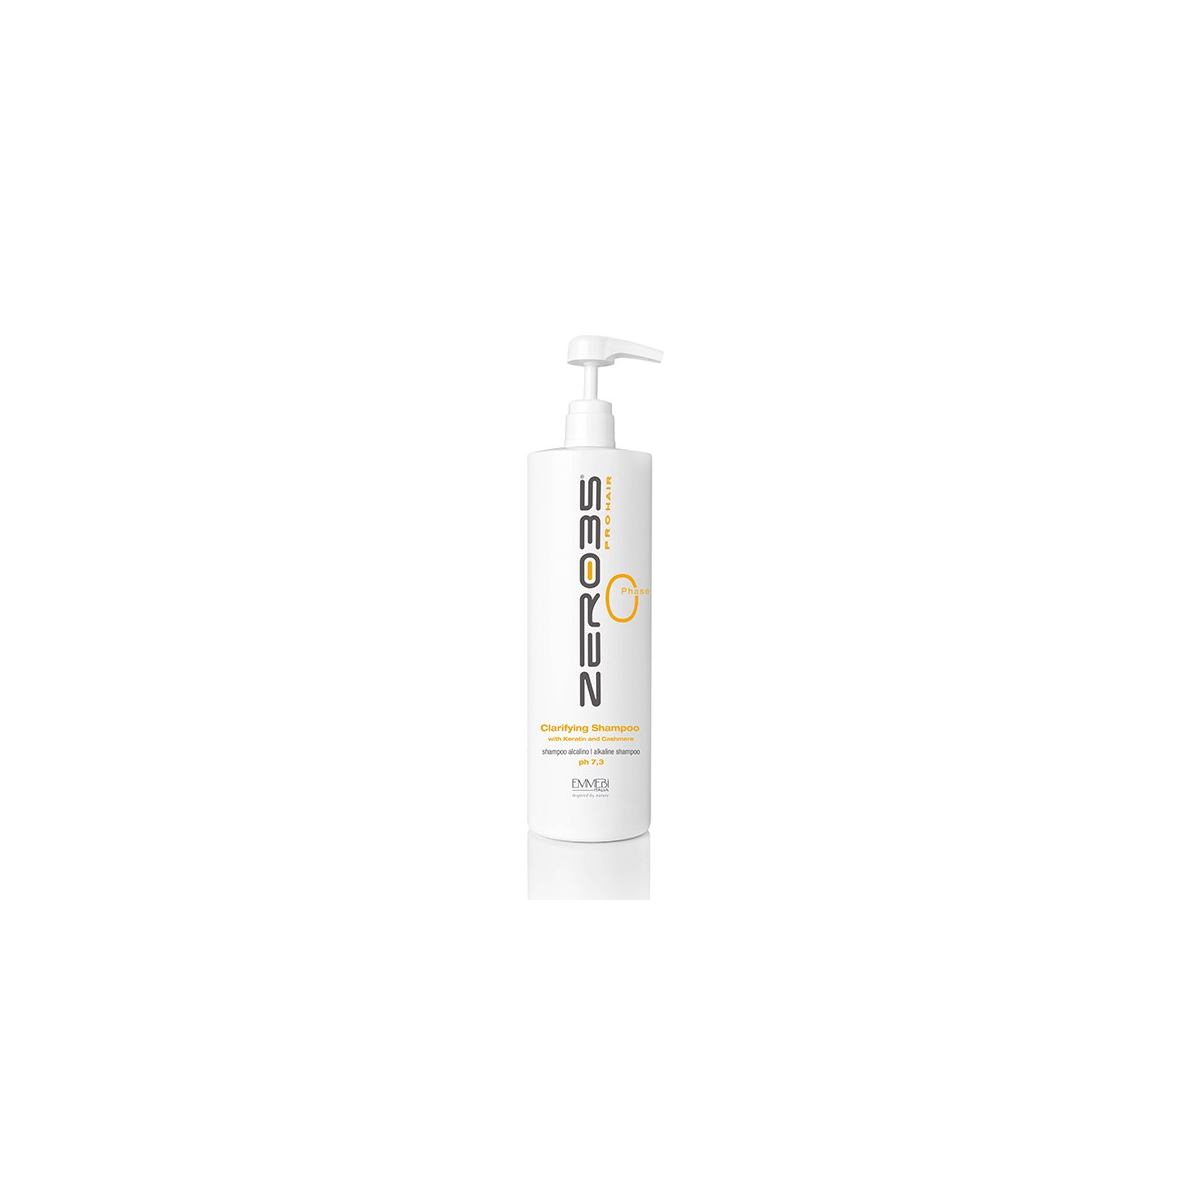 EMMEBI ITALIA - ZER035 PRO HAIR - Clarifyng Shampoo Fase 0 (1000ml) Shampoo pre trattamento tecnico